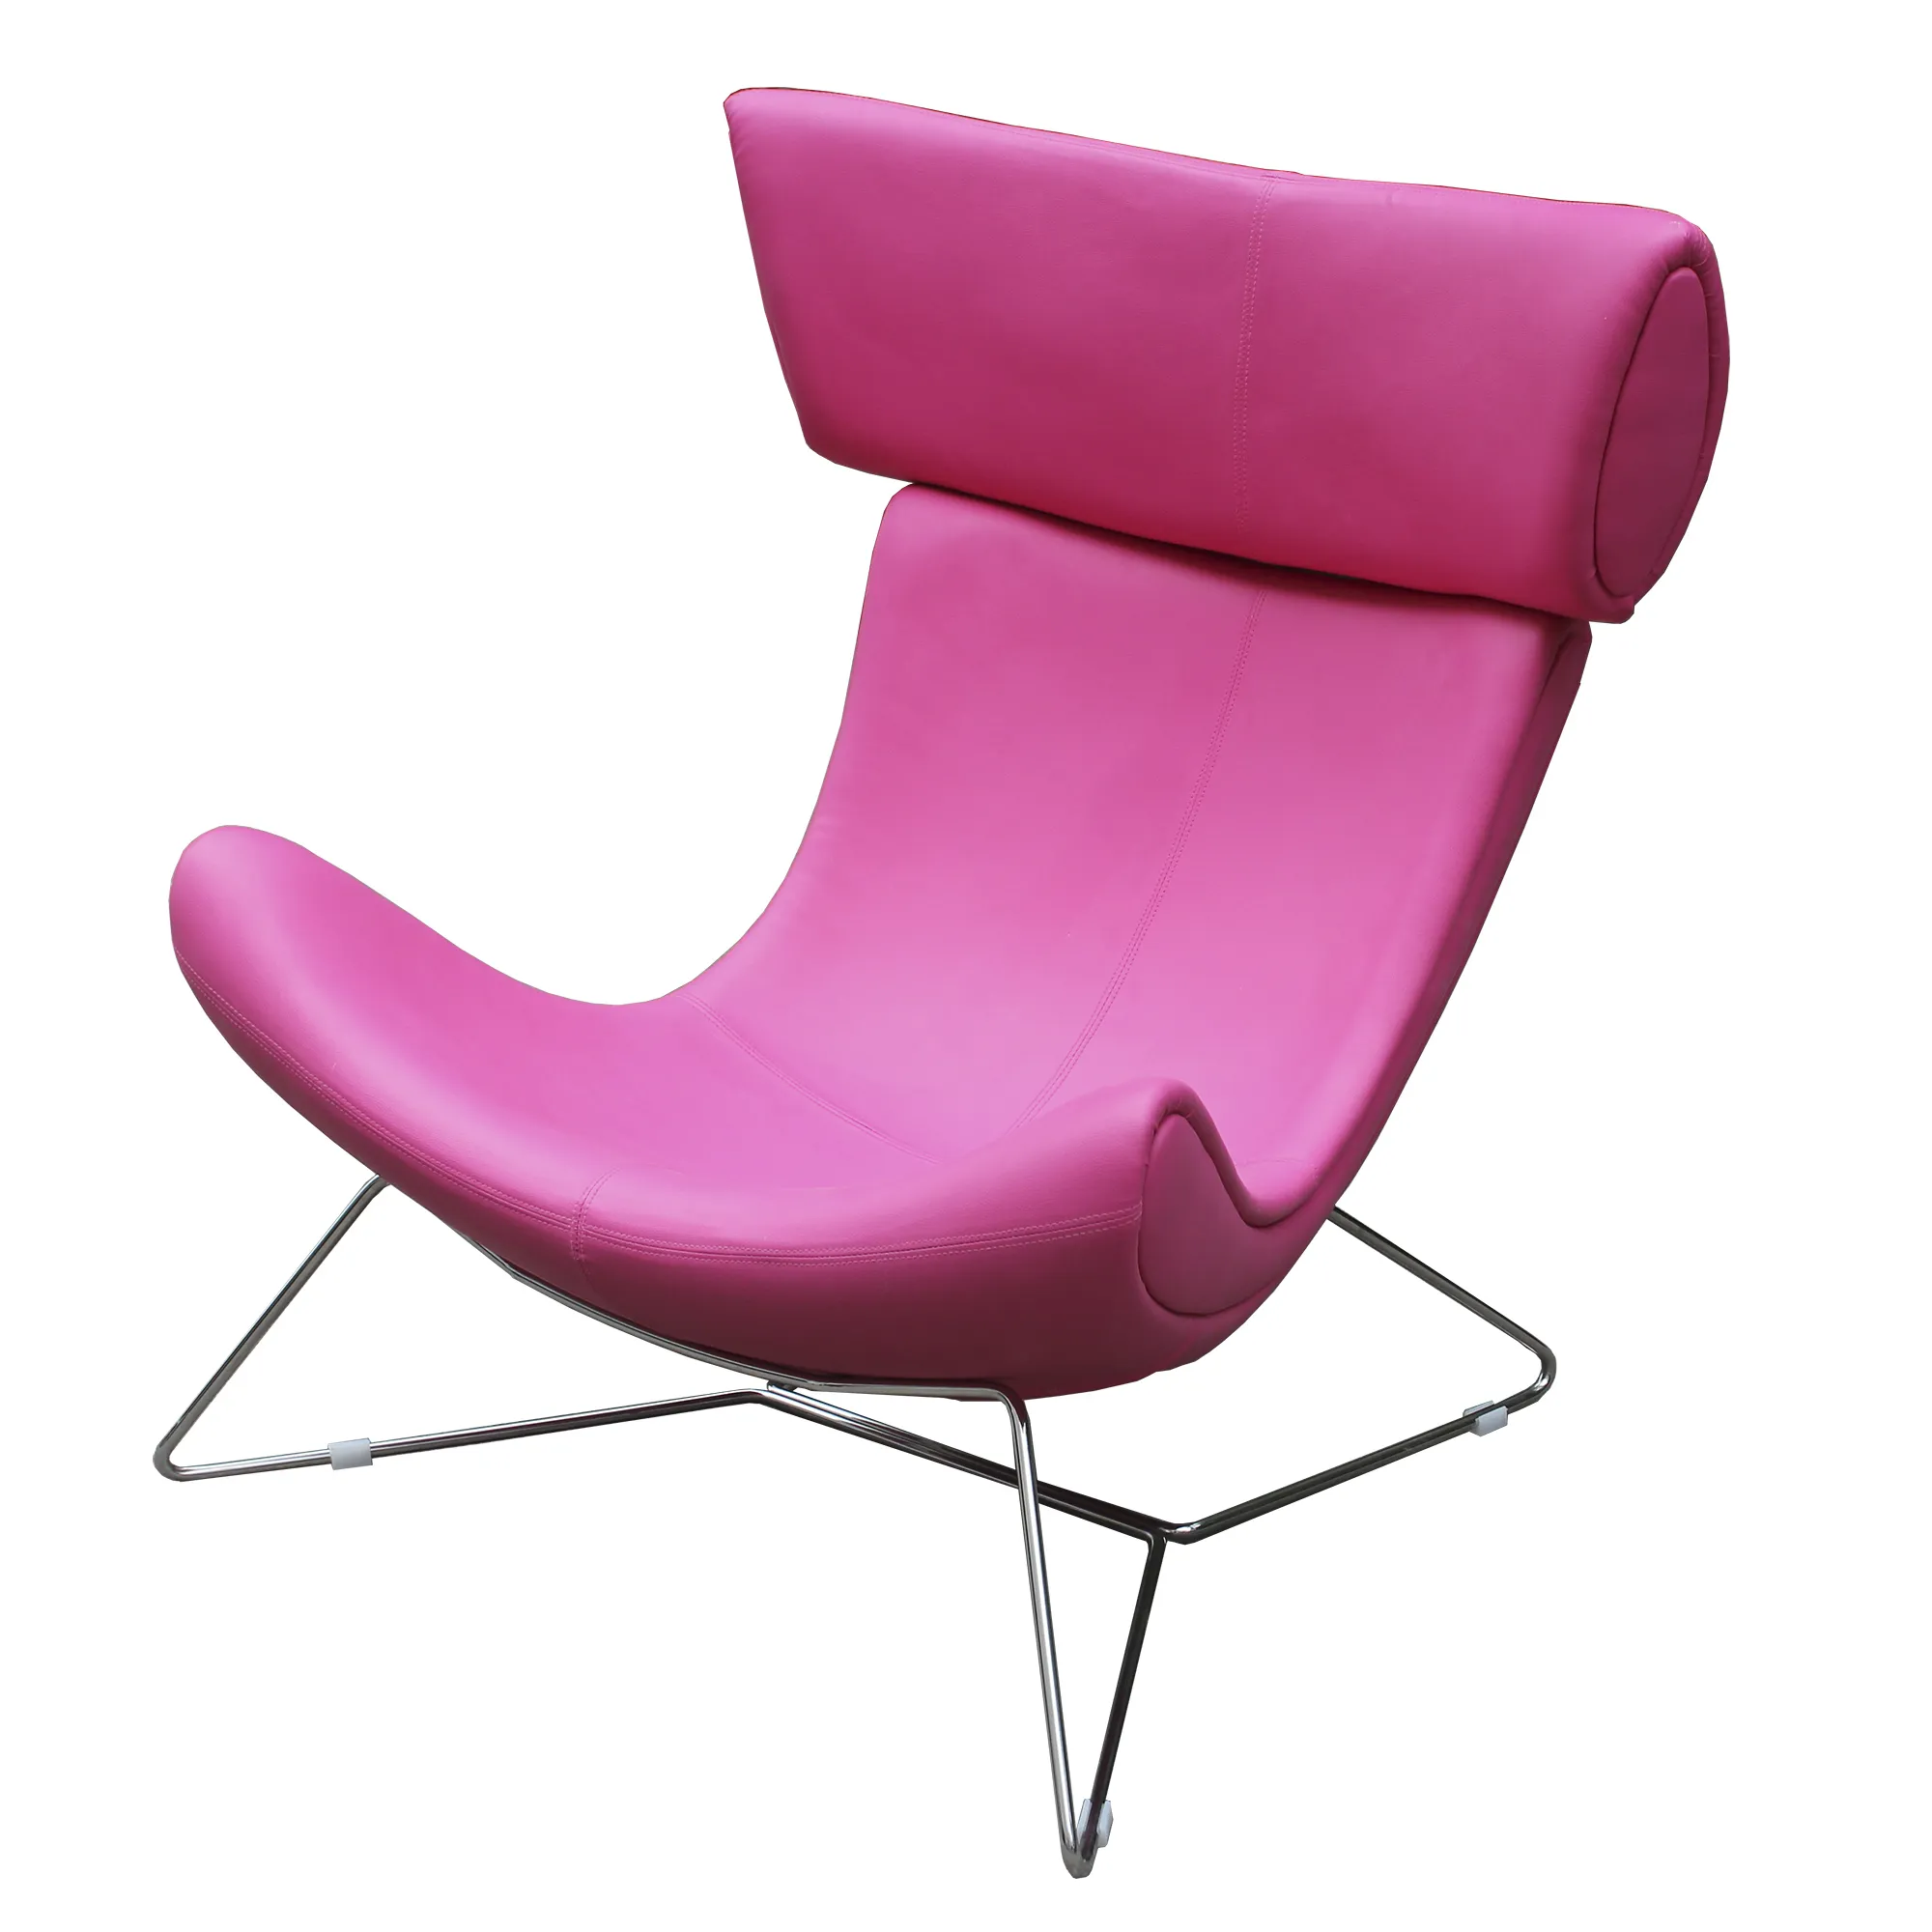 2019 postmodern metal legs unique design U shape chaise lounge chair